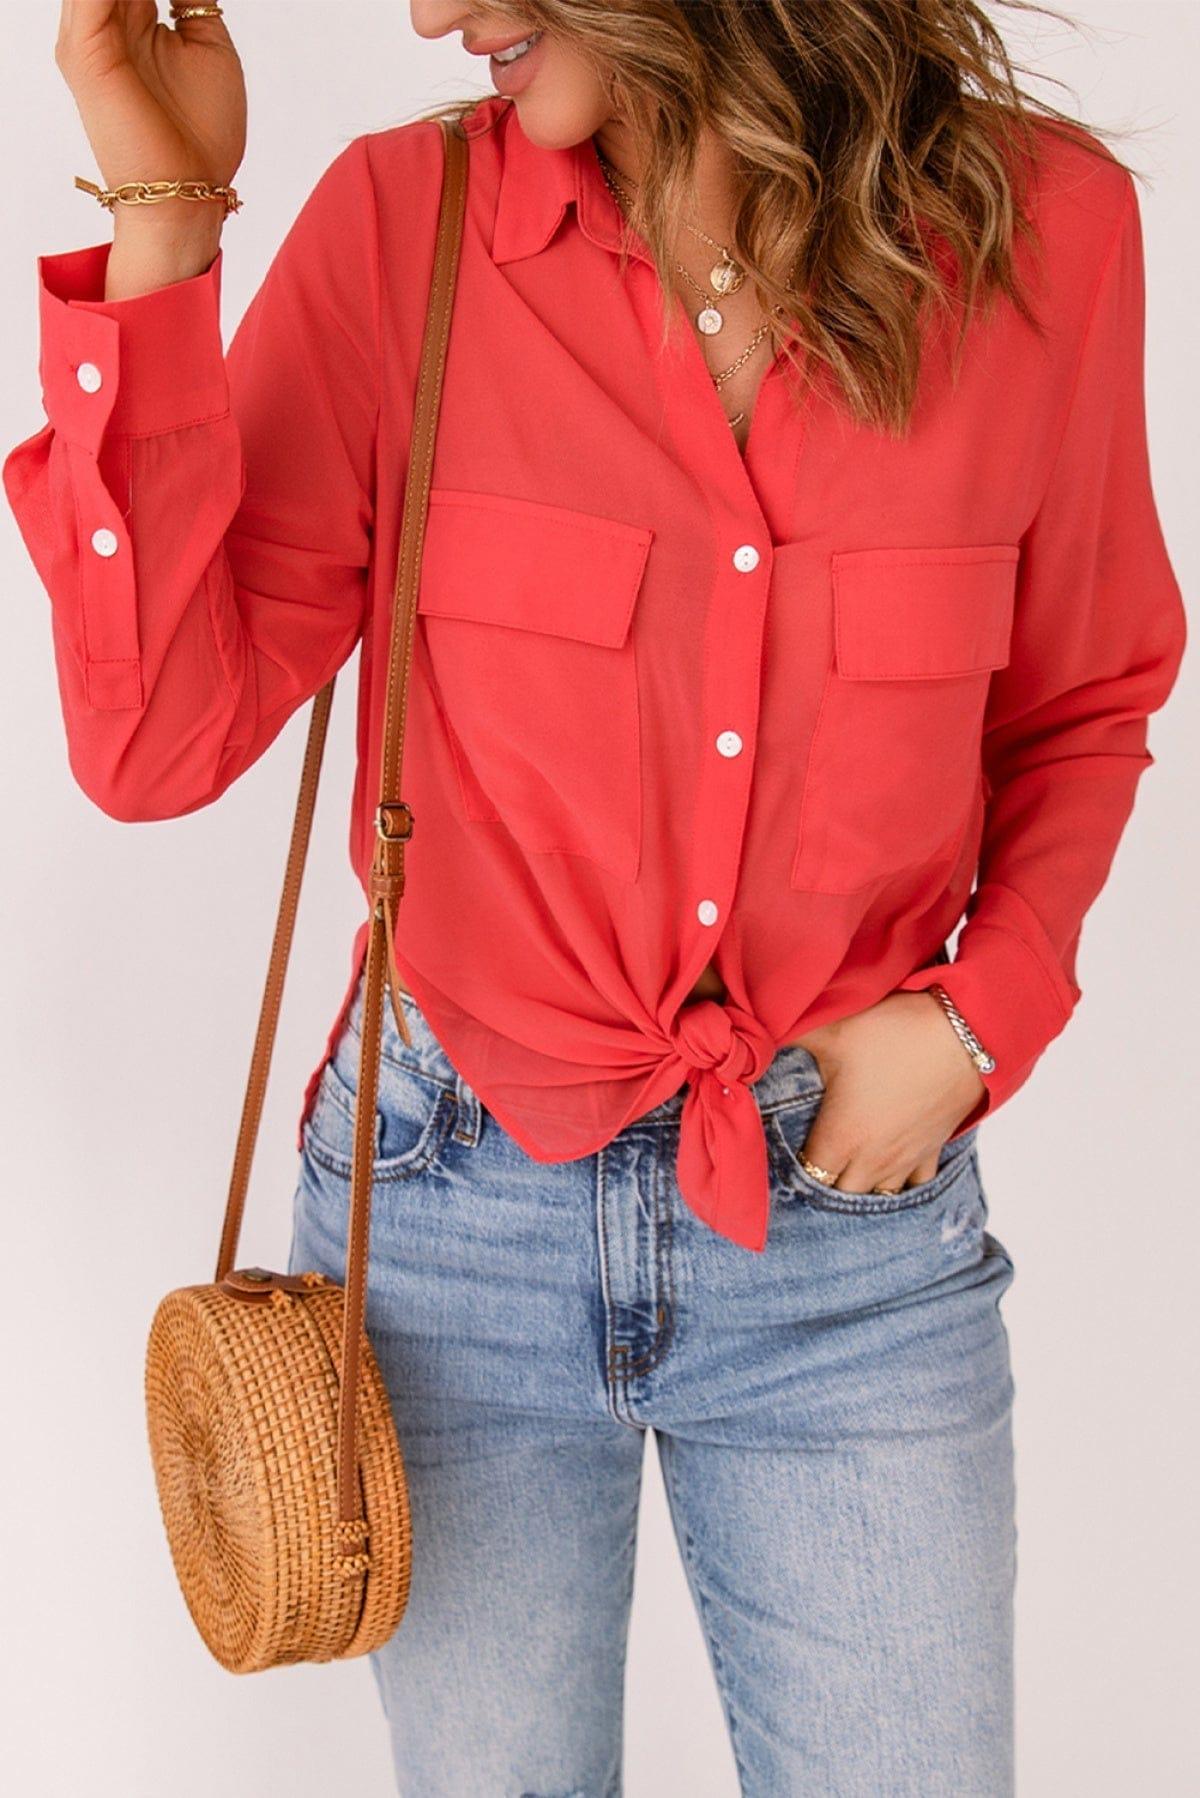 Flap Pocket Button Up Shirt Red